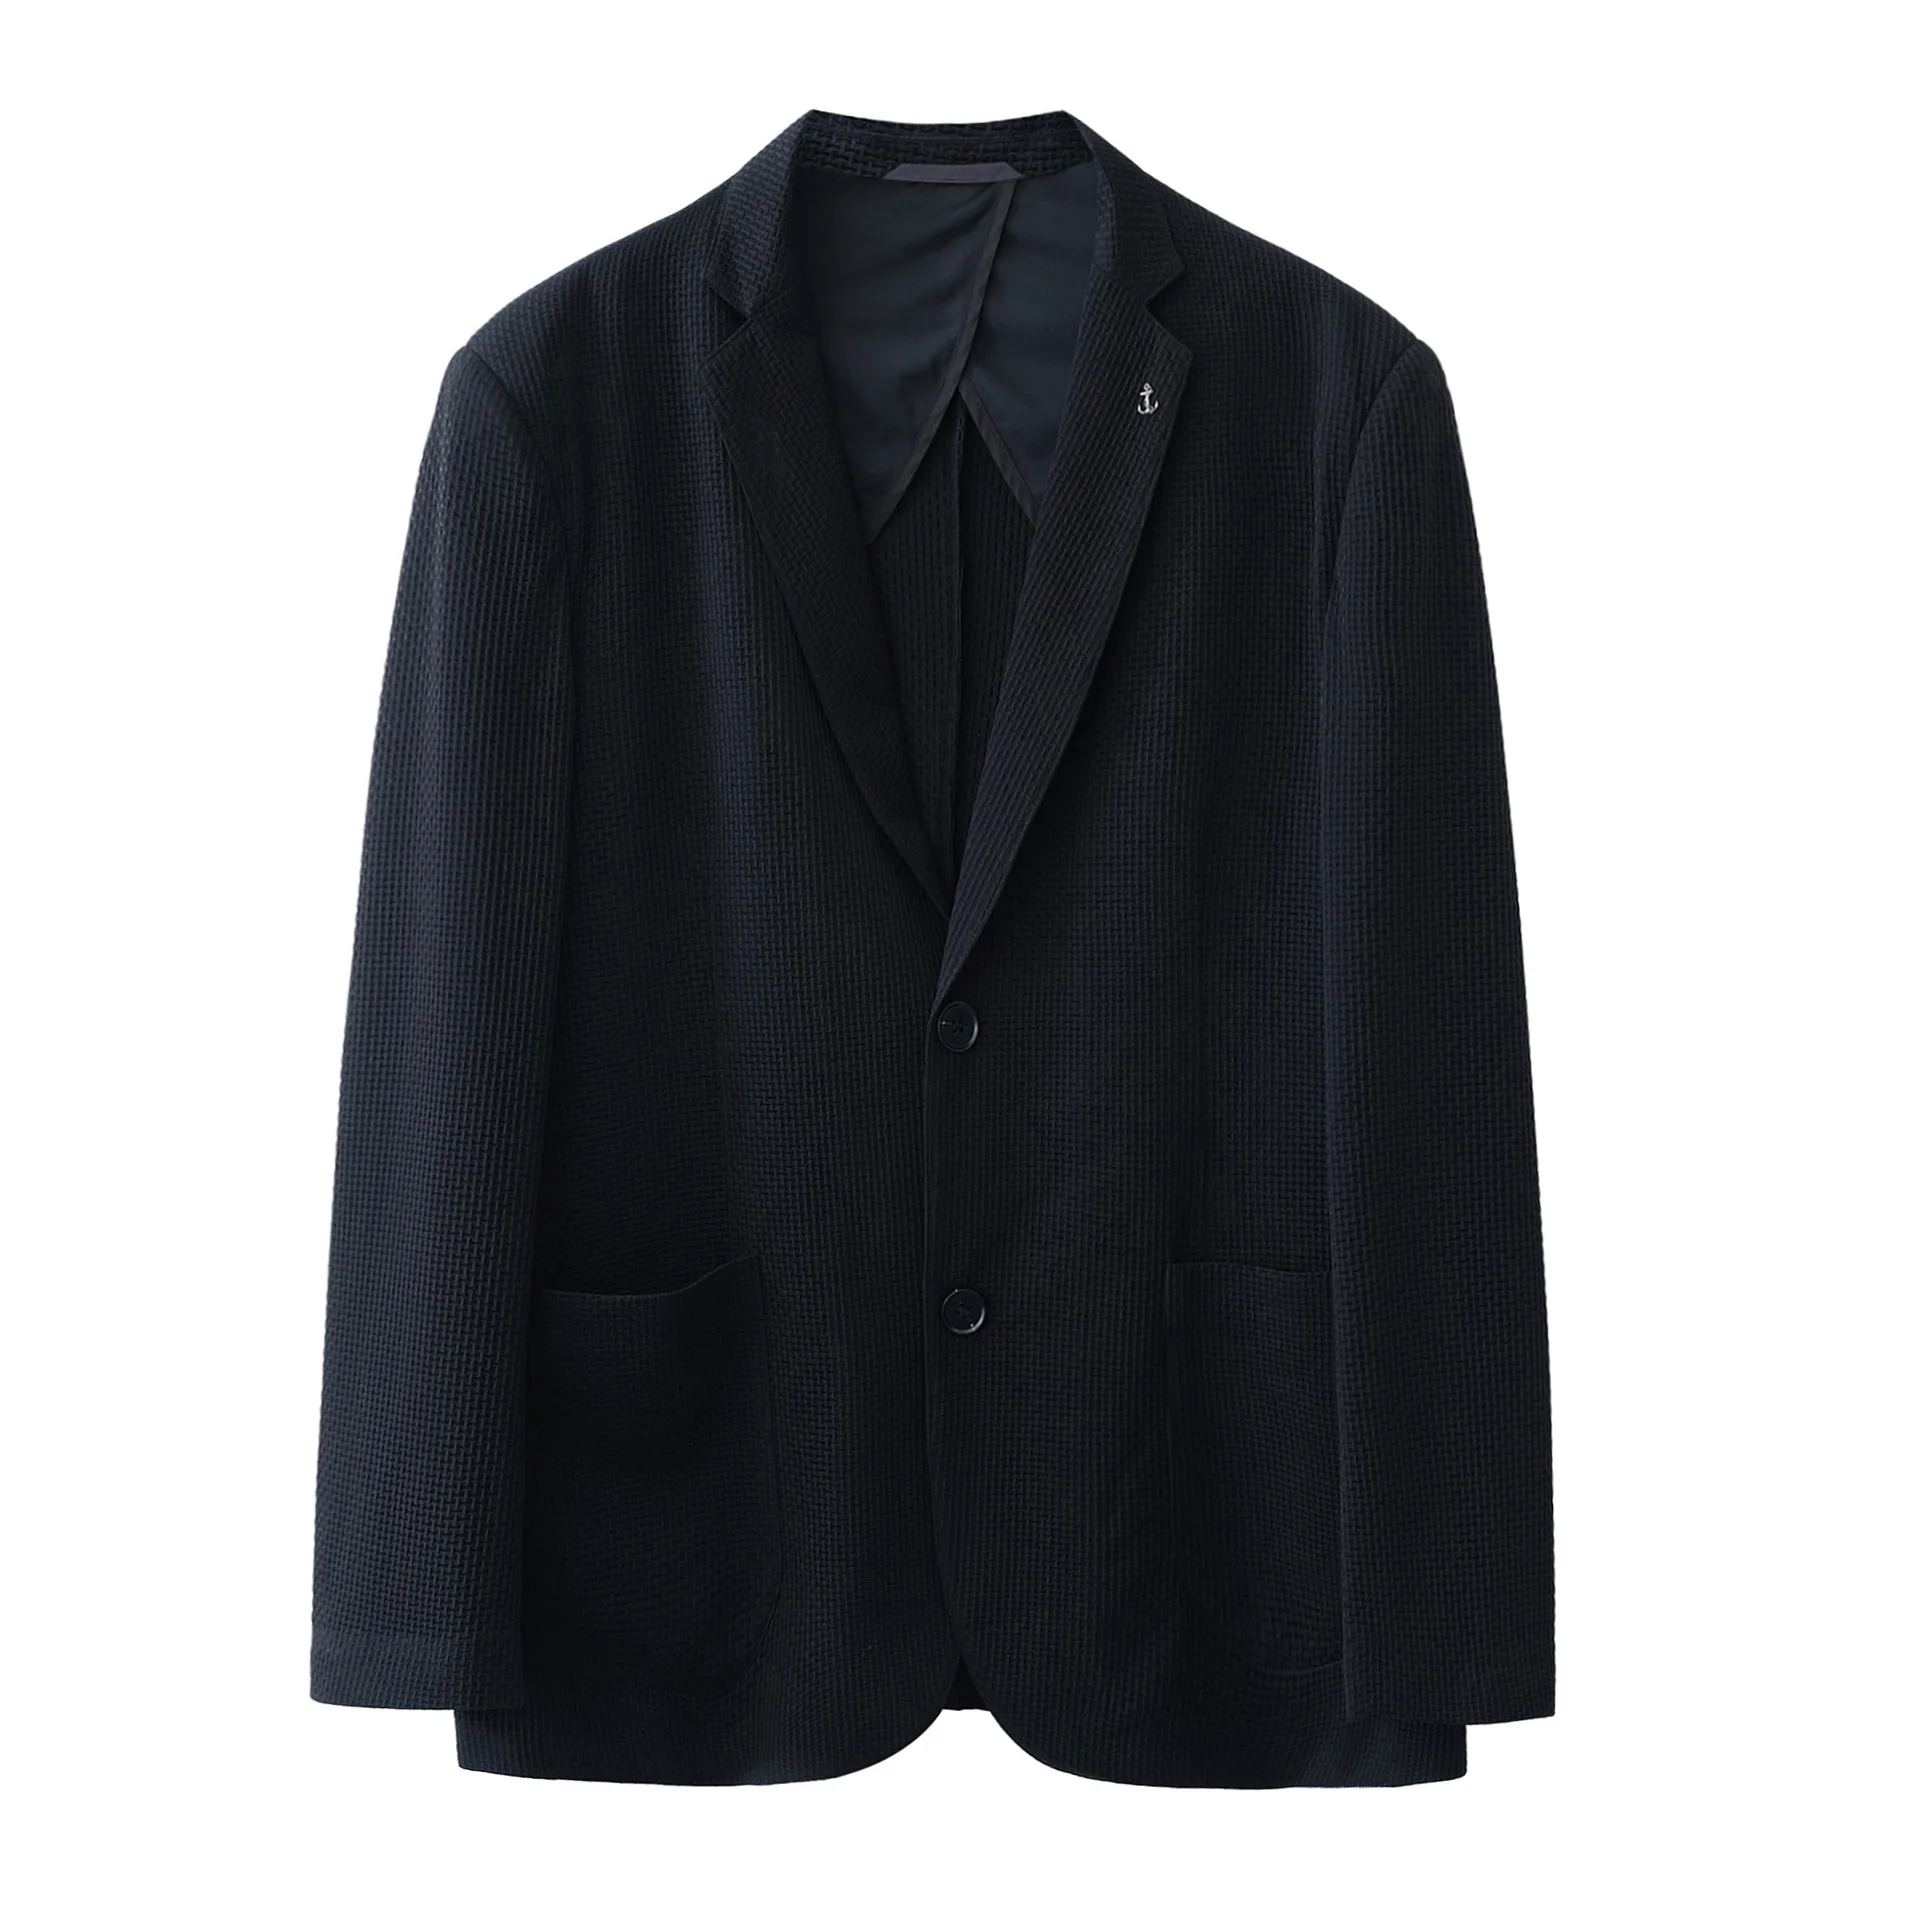 5979-2023 Autumn and winter new product men's suit business casual simplicity grid single west jacket men's top coat